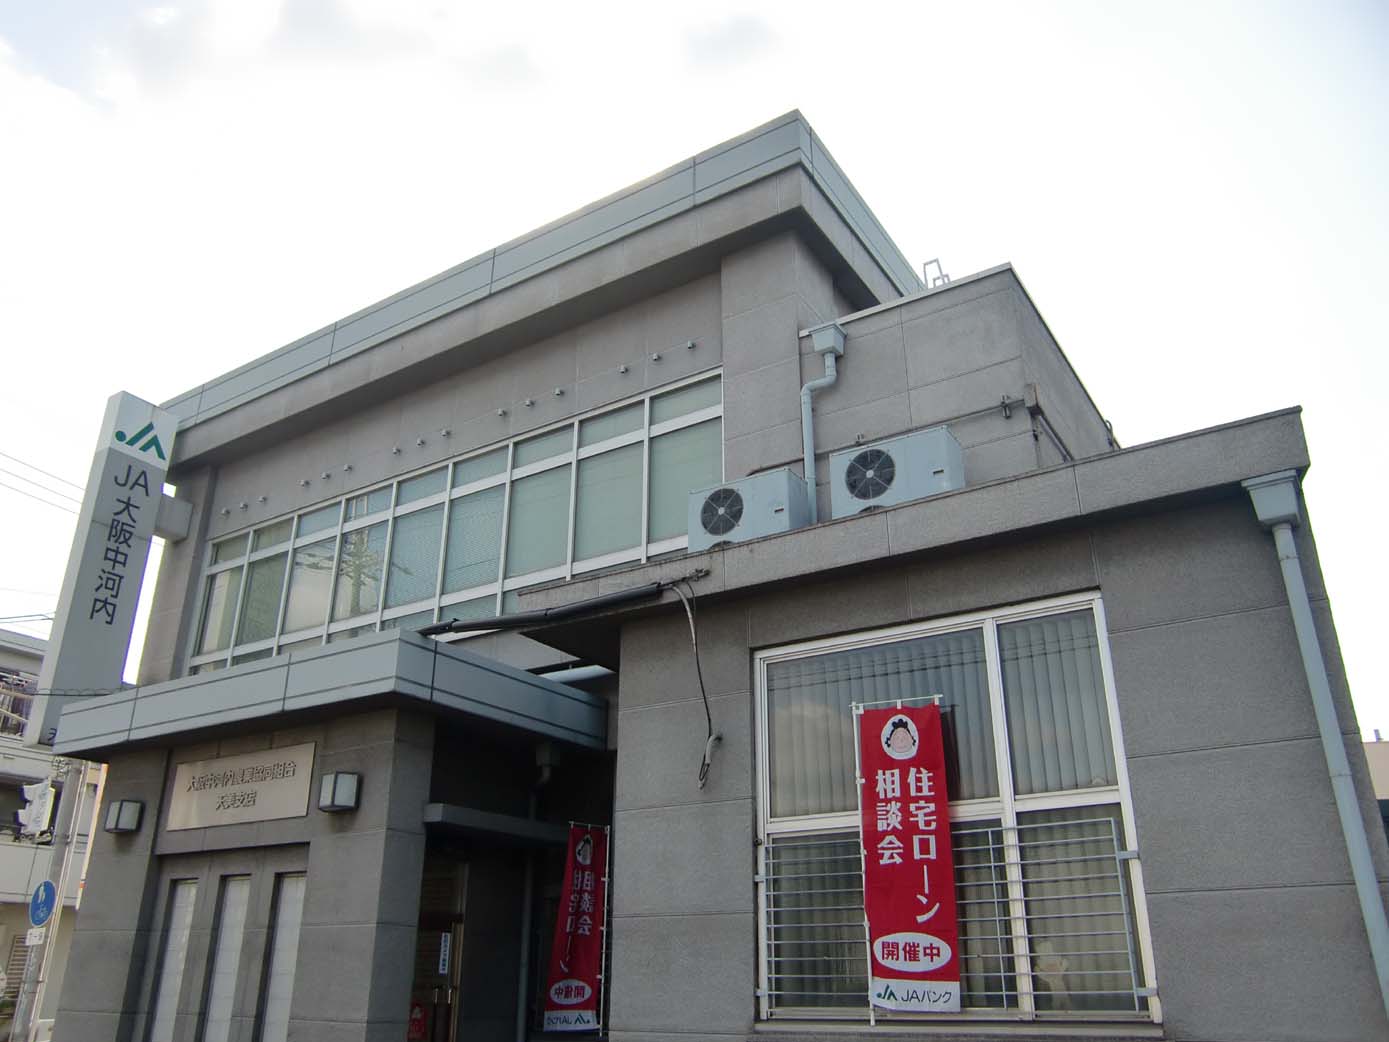 Bank. JA 1125m to Osaka Nakagochi Amami Branch (Bank)